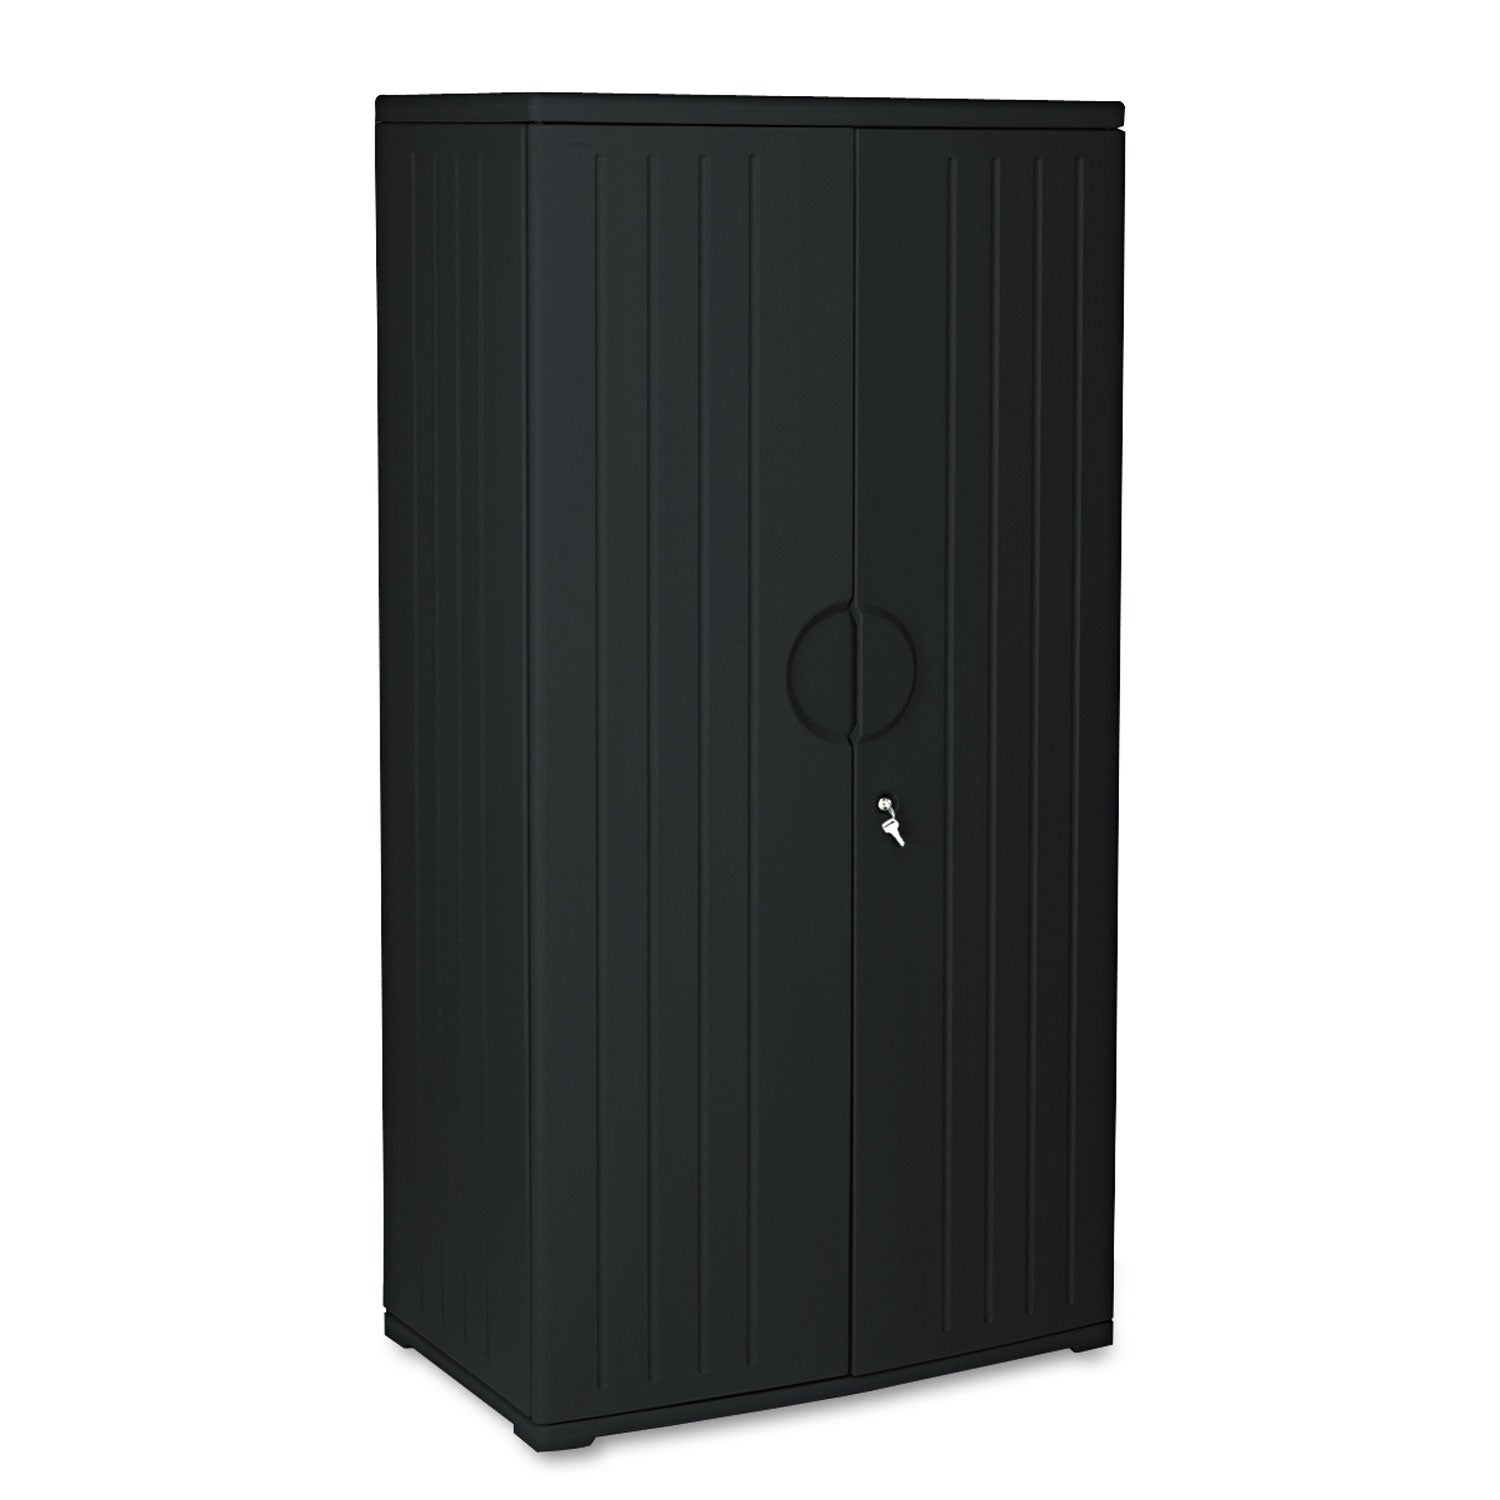 Rough n Ready Storage Cabinet, Four-Shelf, 36w x 22d x 72h, Black - 